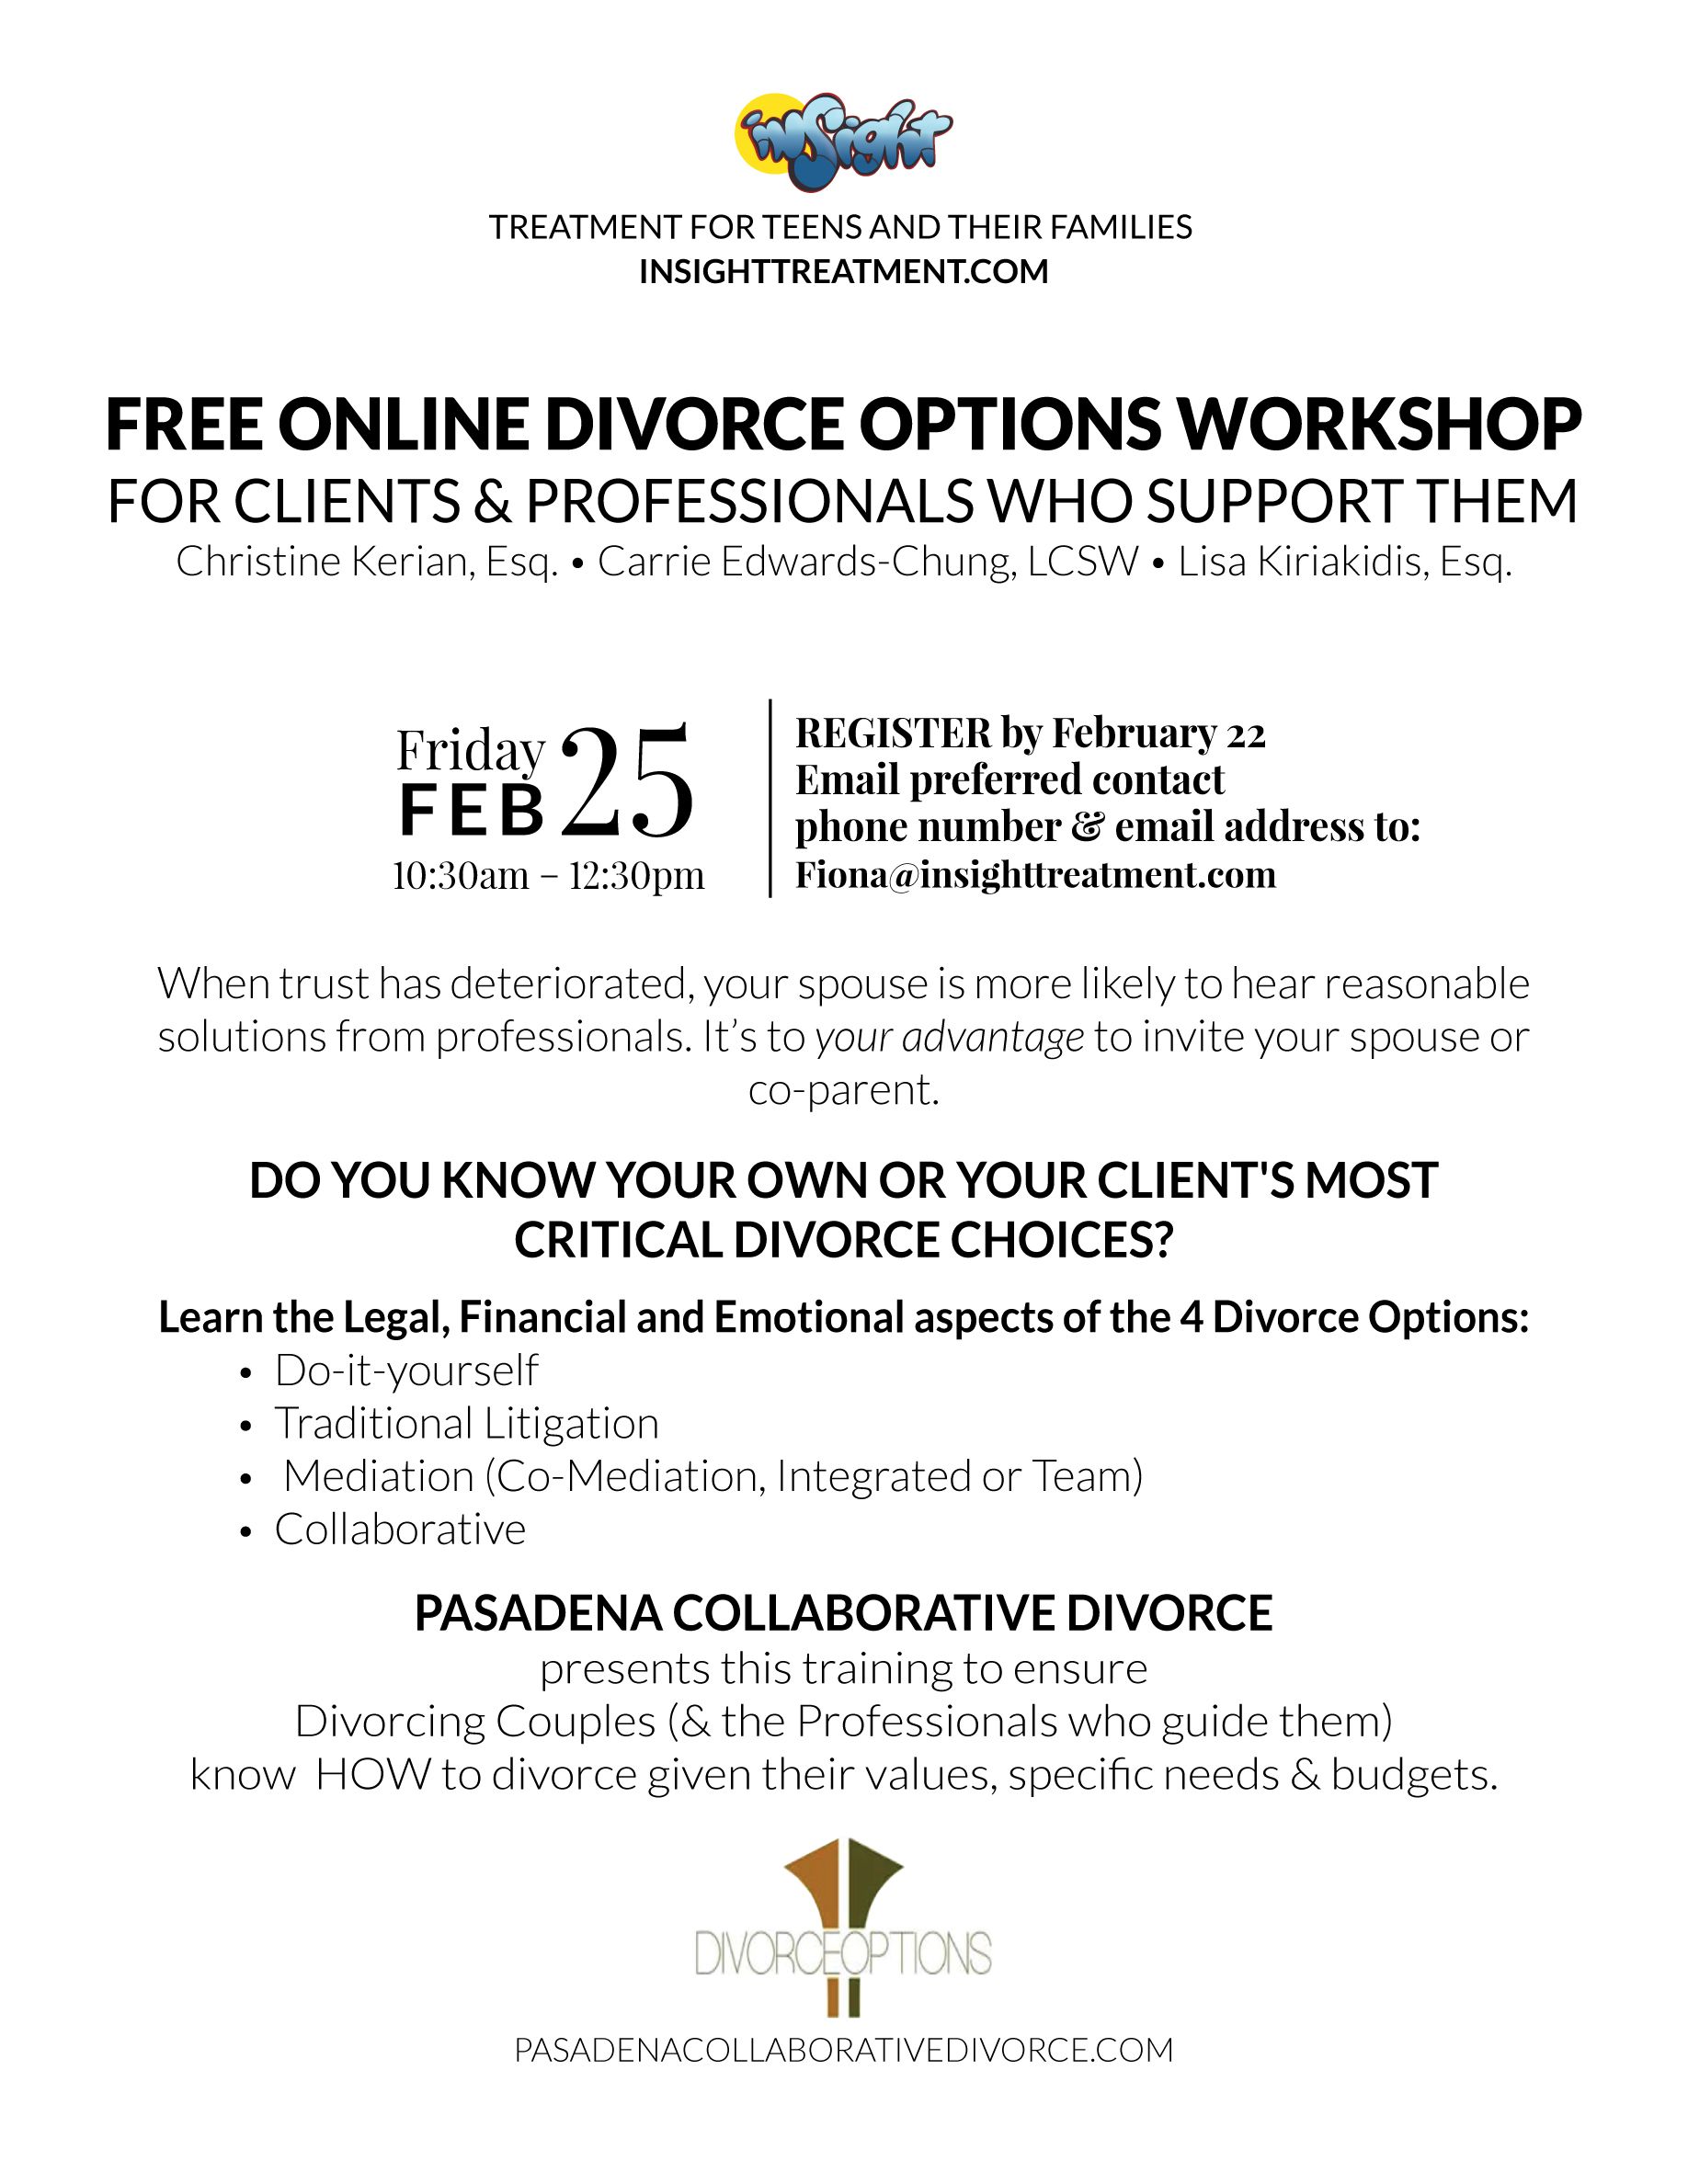 Divorce Options Workshop February 25th